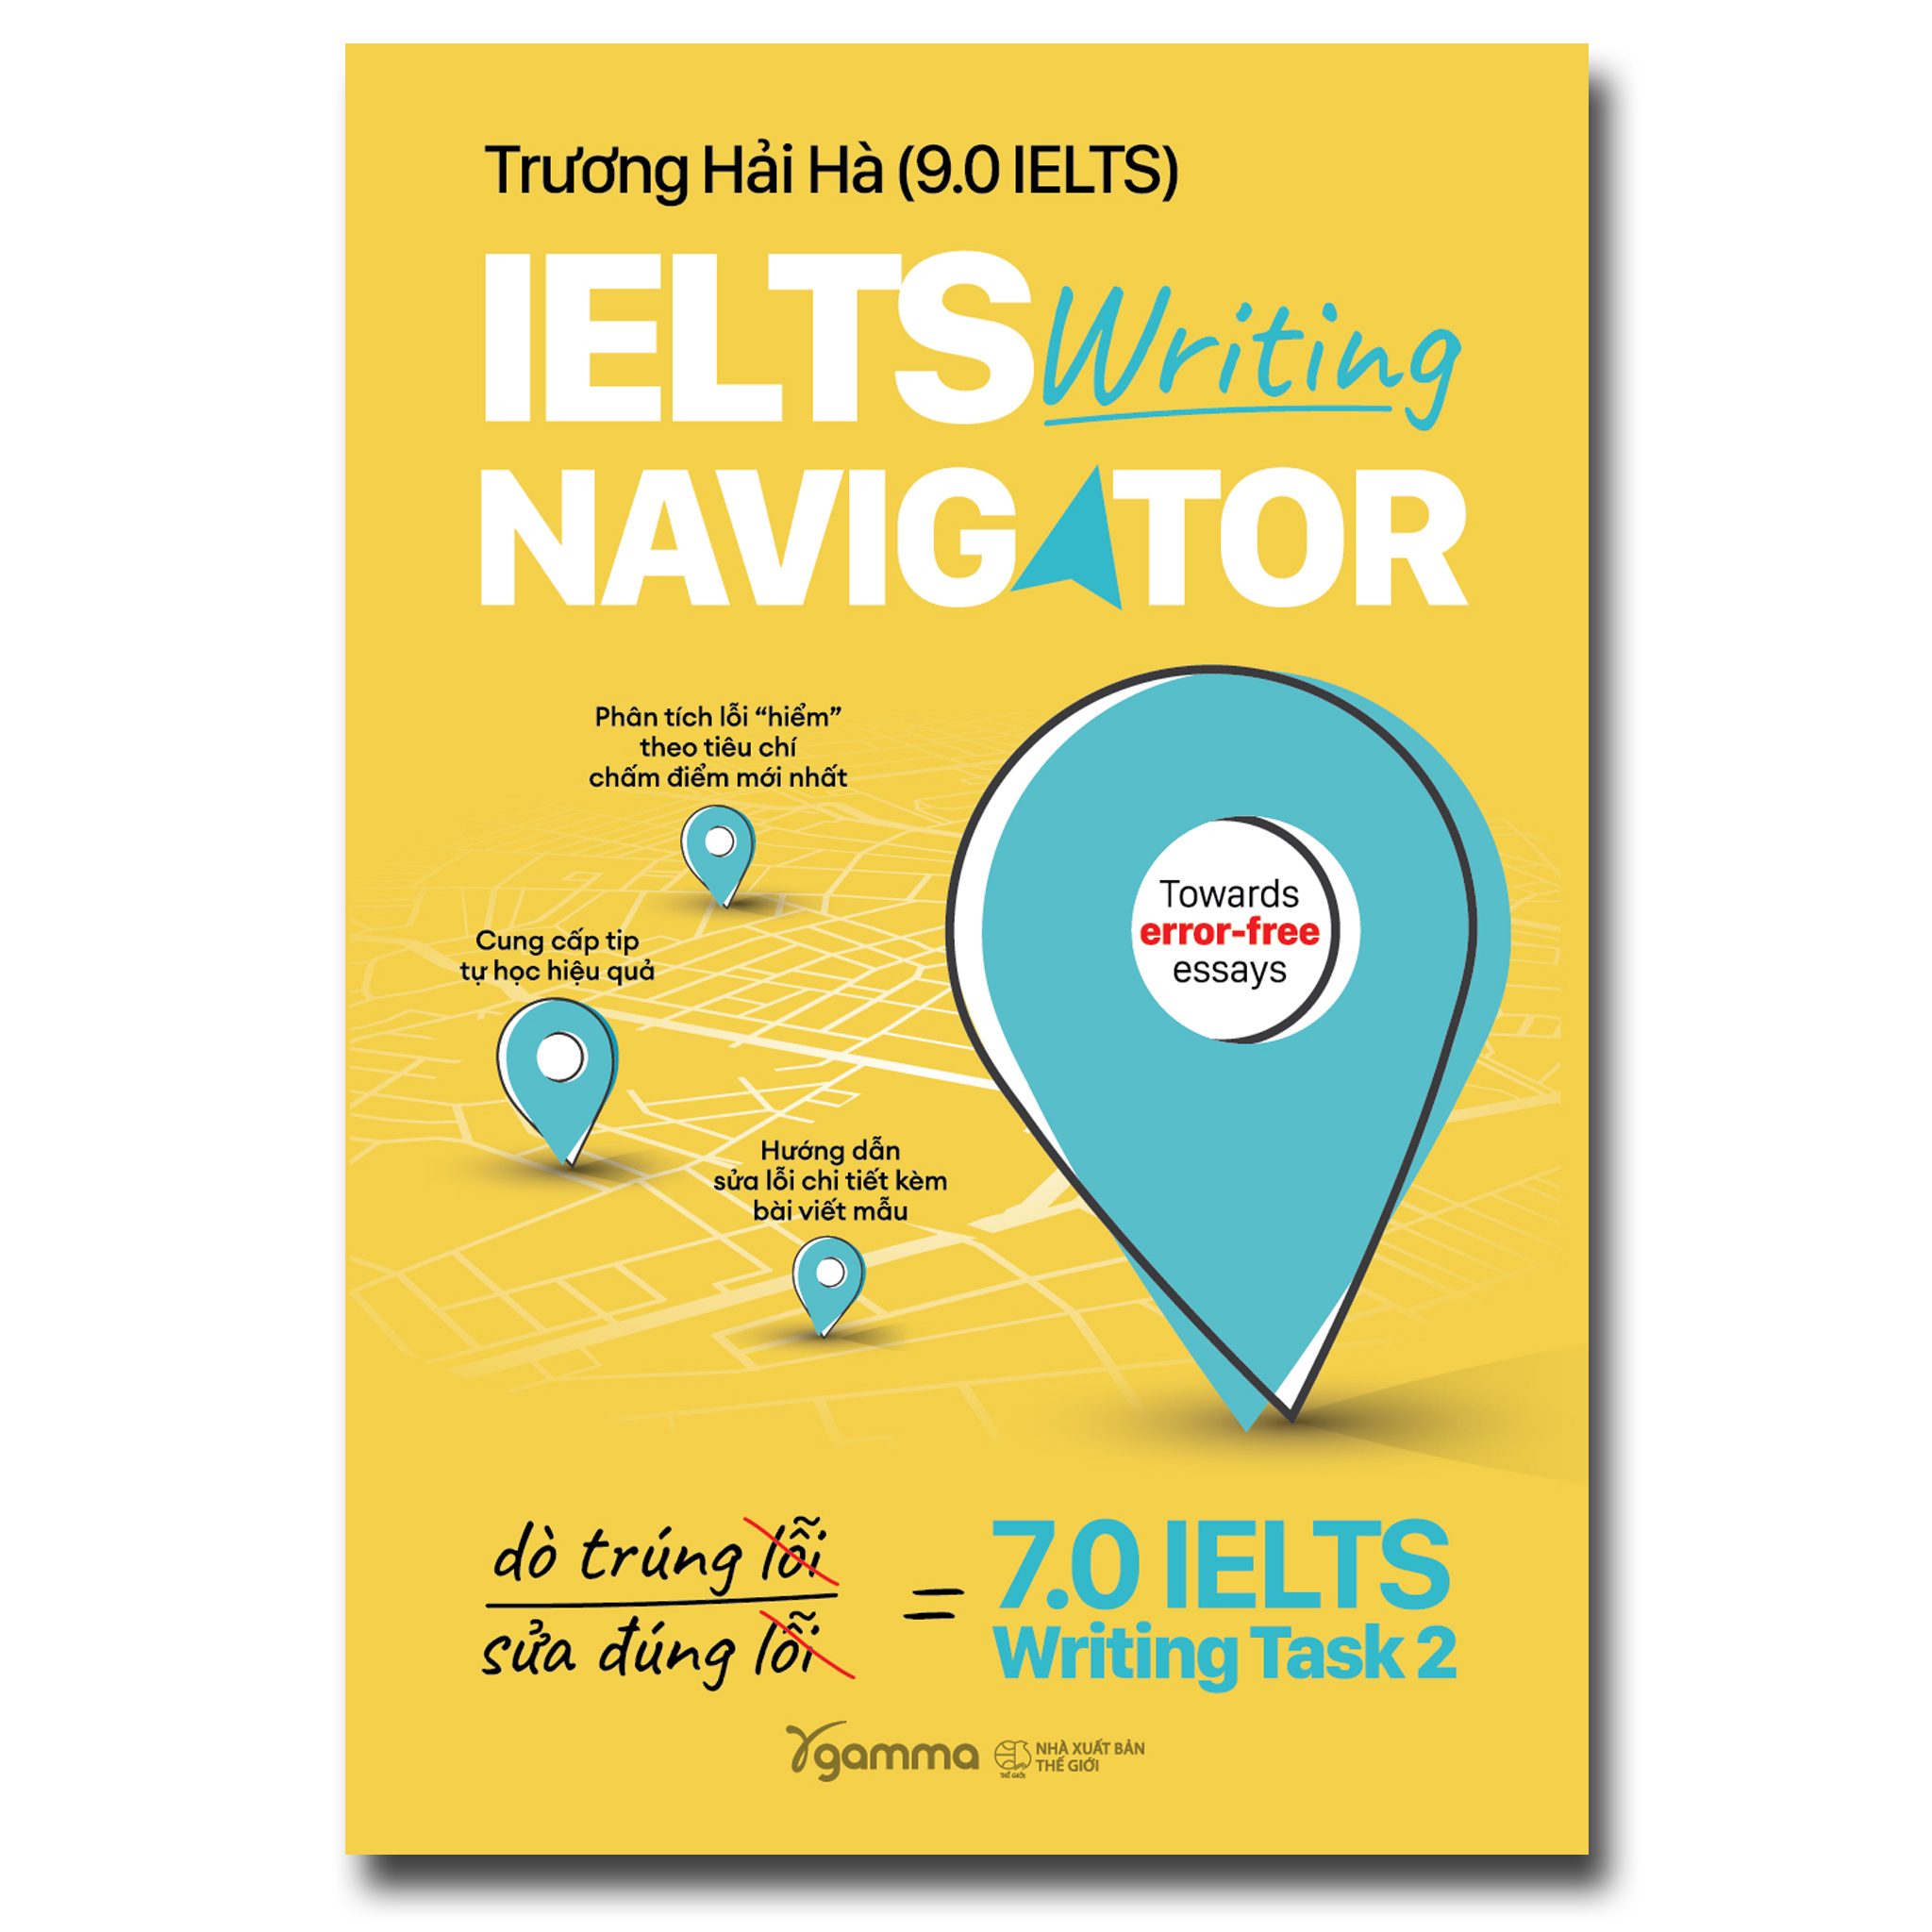 Trạm Đọc Official | IELTS Writing Navigator